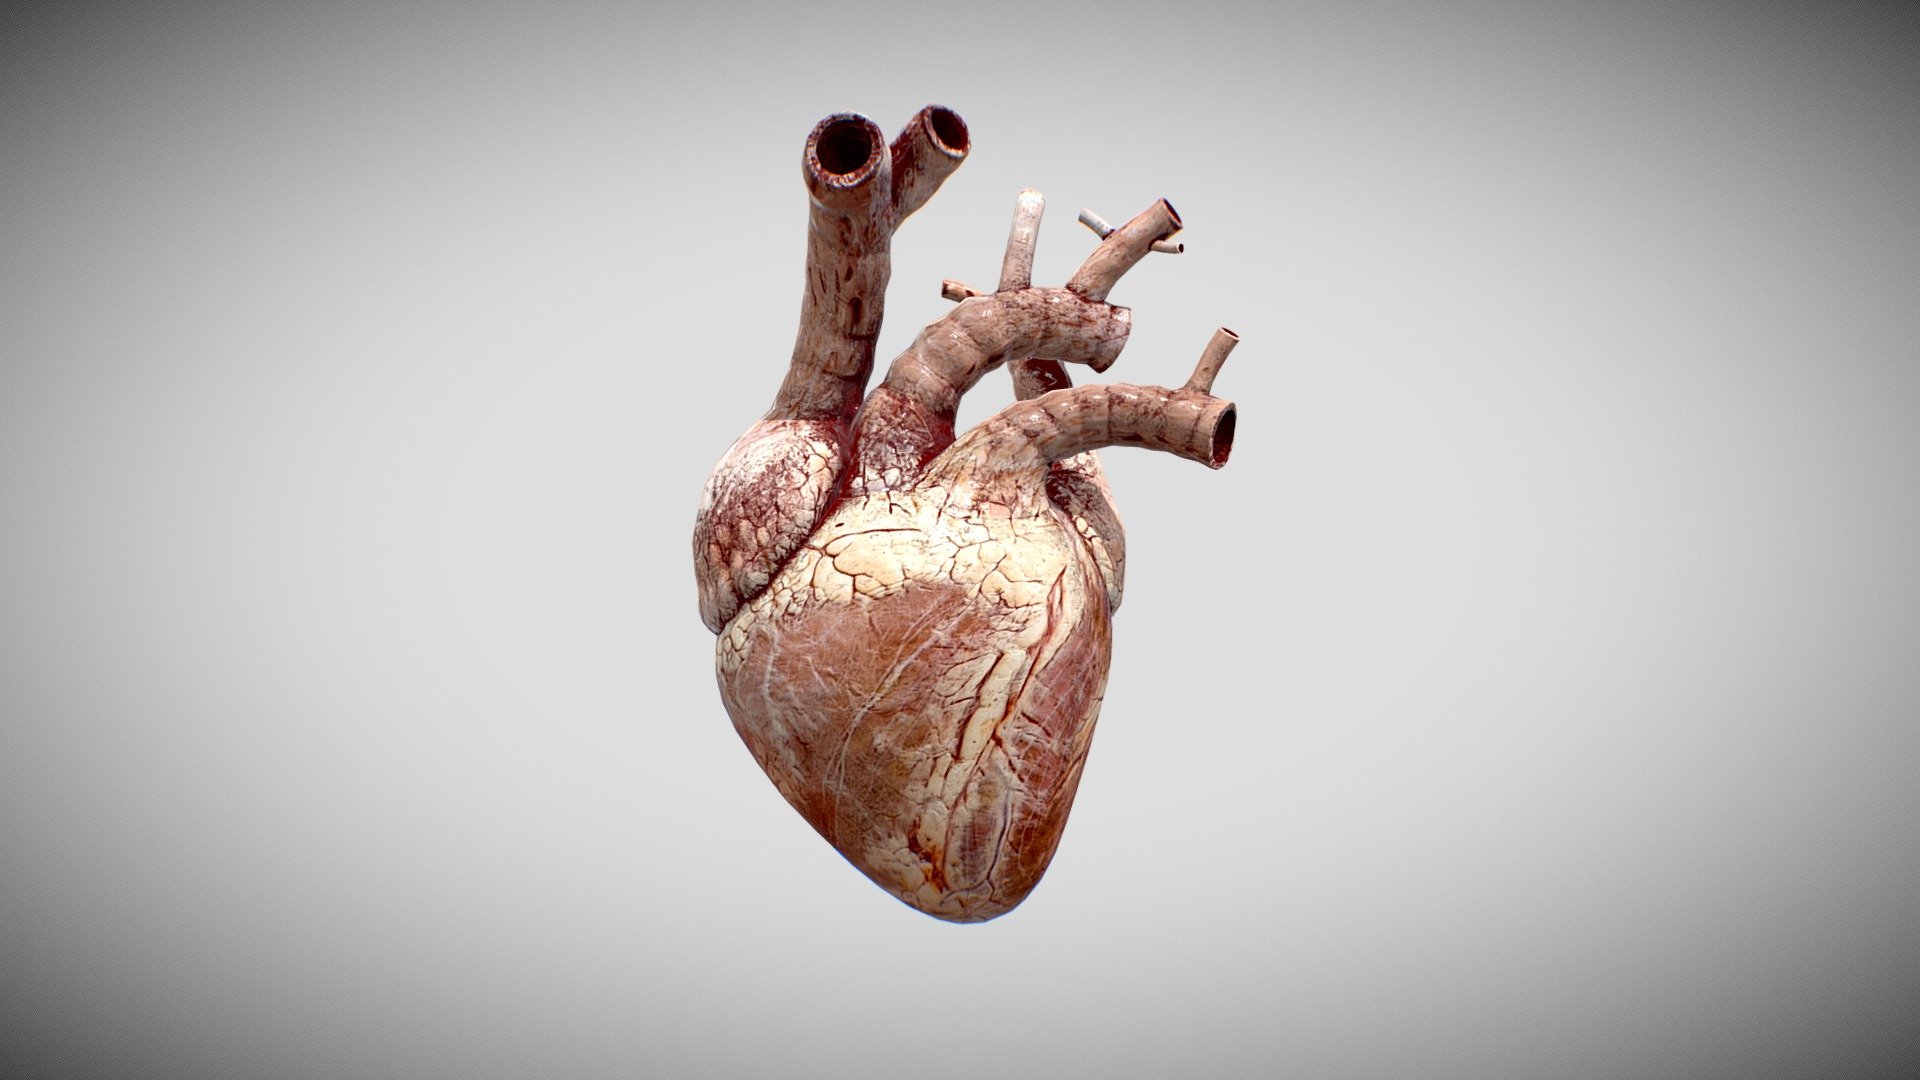 3d model of the human heart. 

Animated - Heart Animated - 3D model by djkorg 3d model